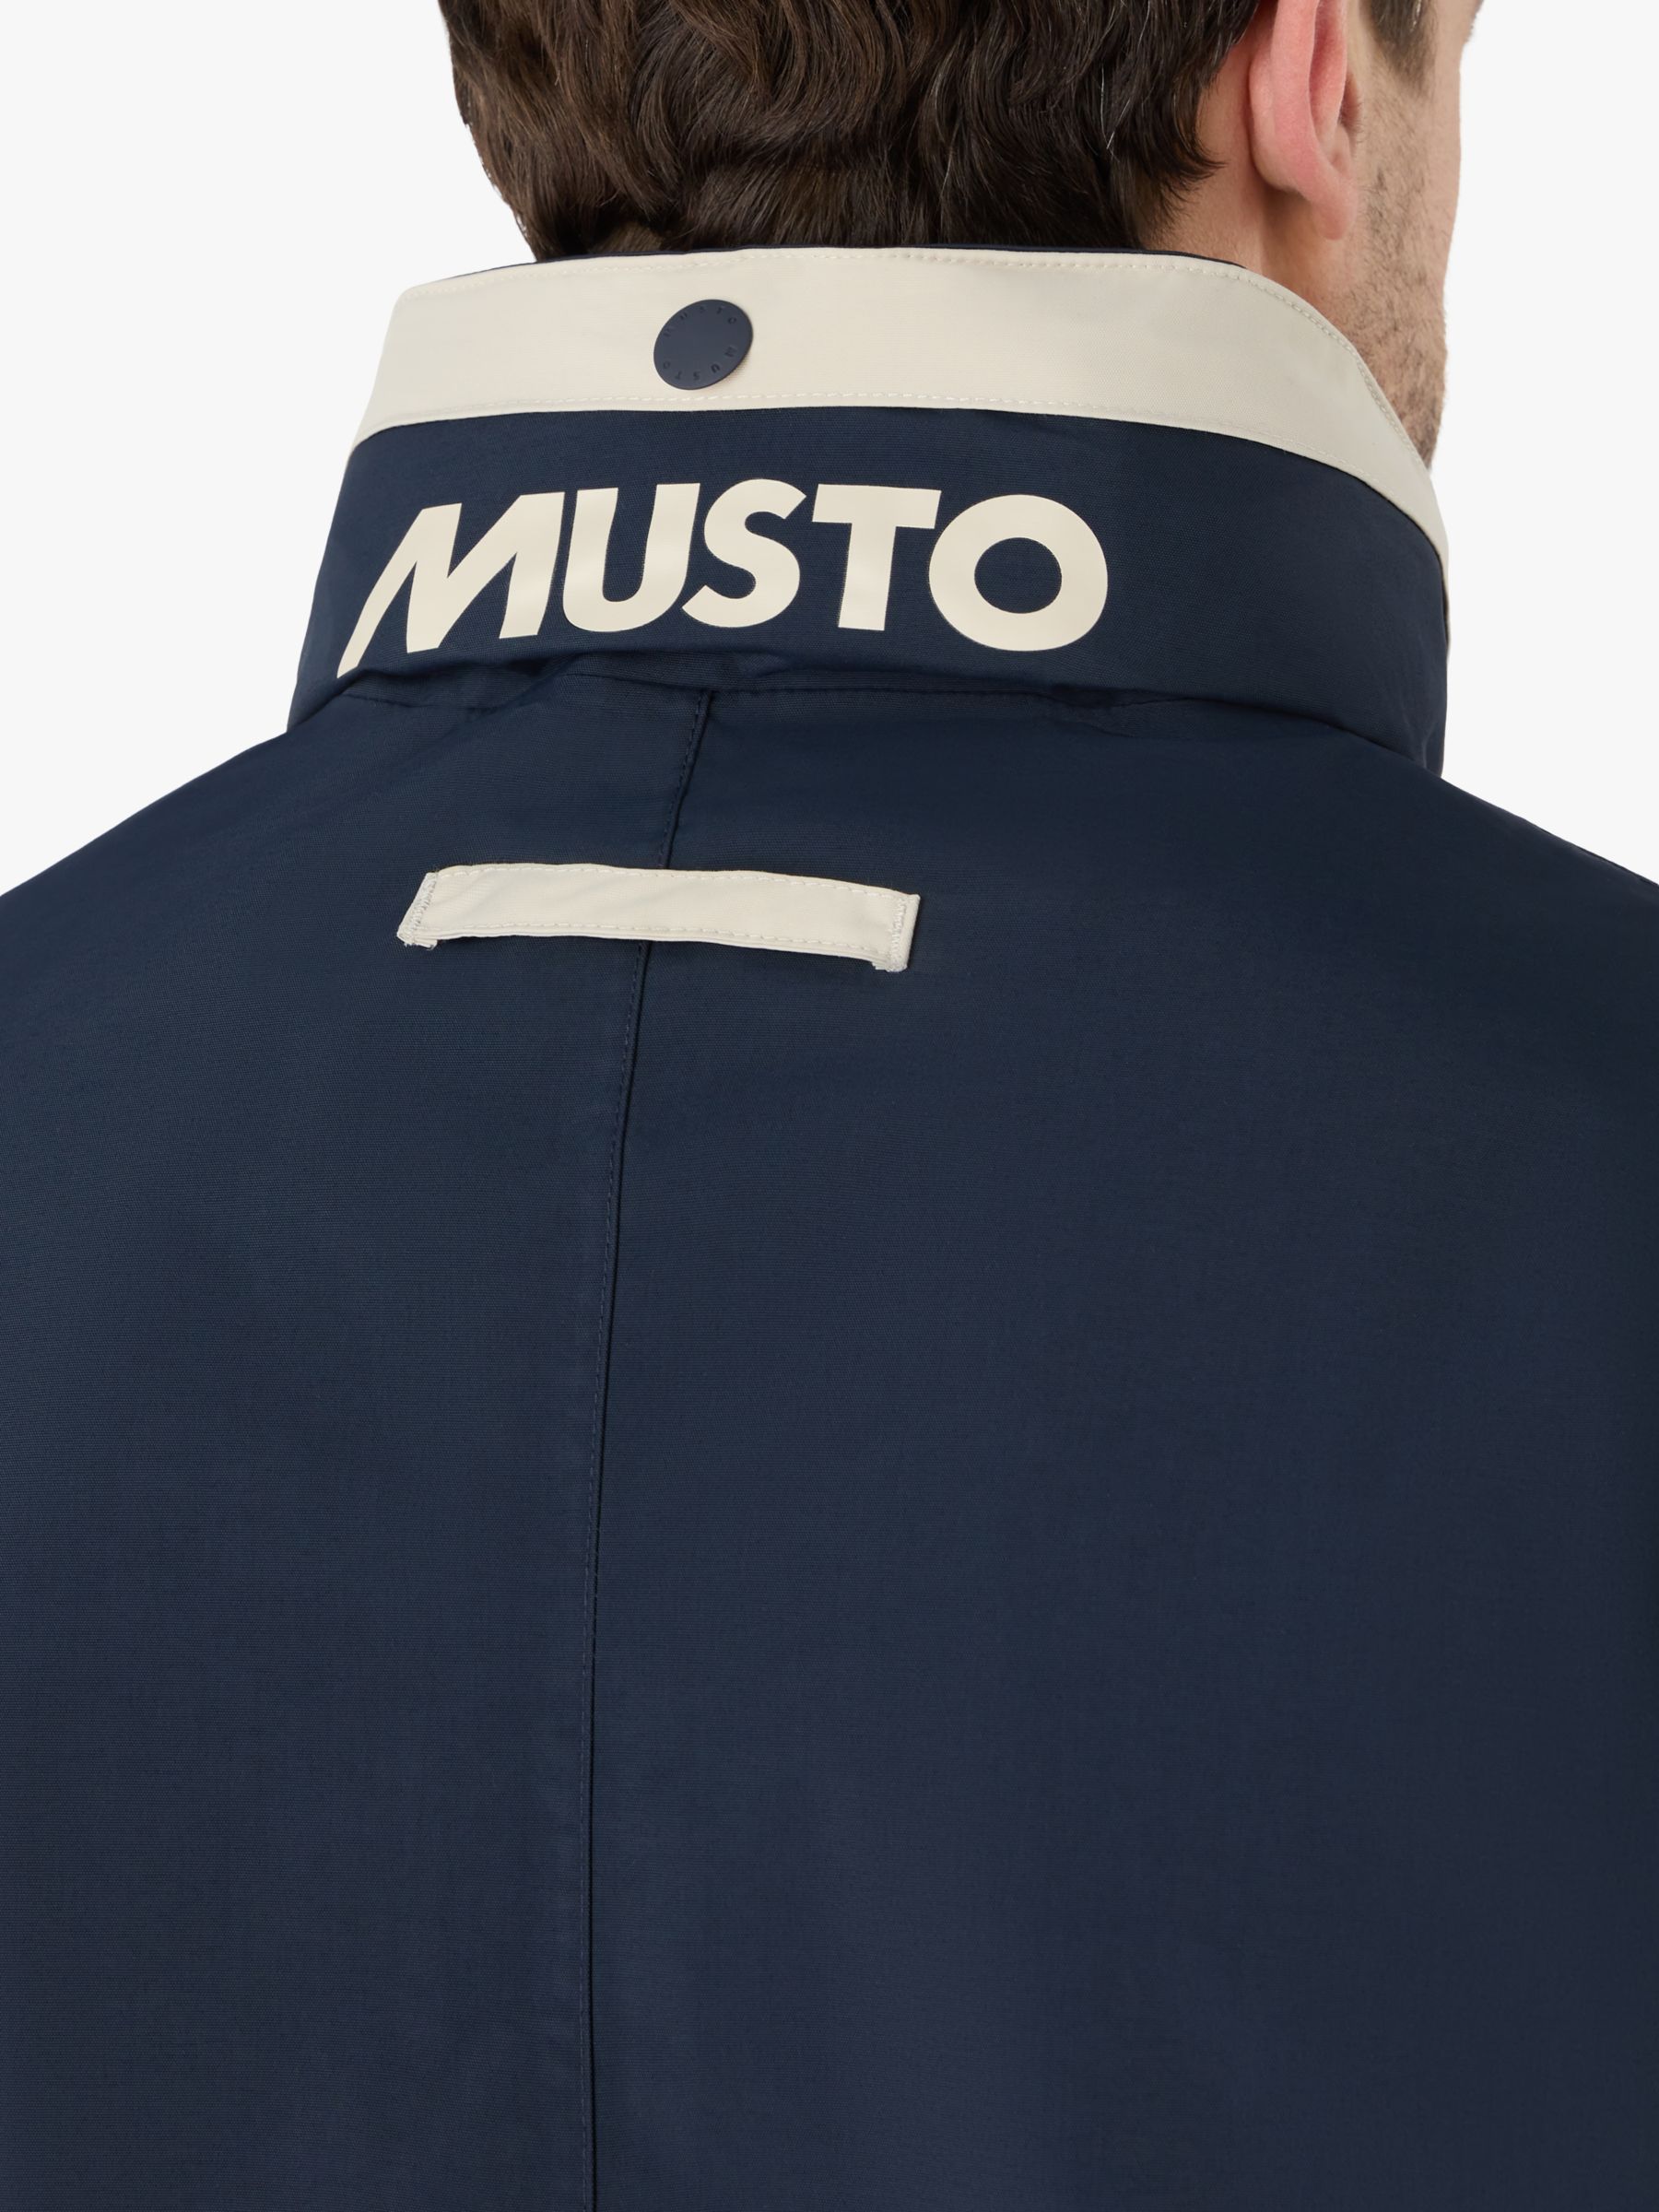 Musto BRI Classic Waterproof Jacket, Pumice/Navy, M